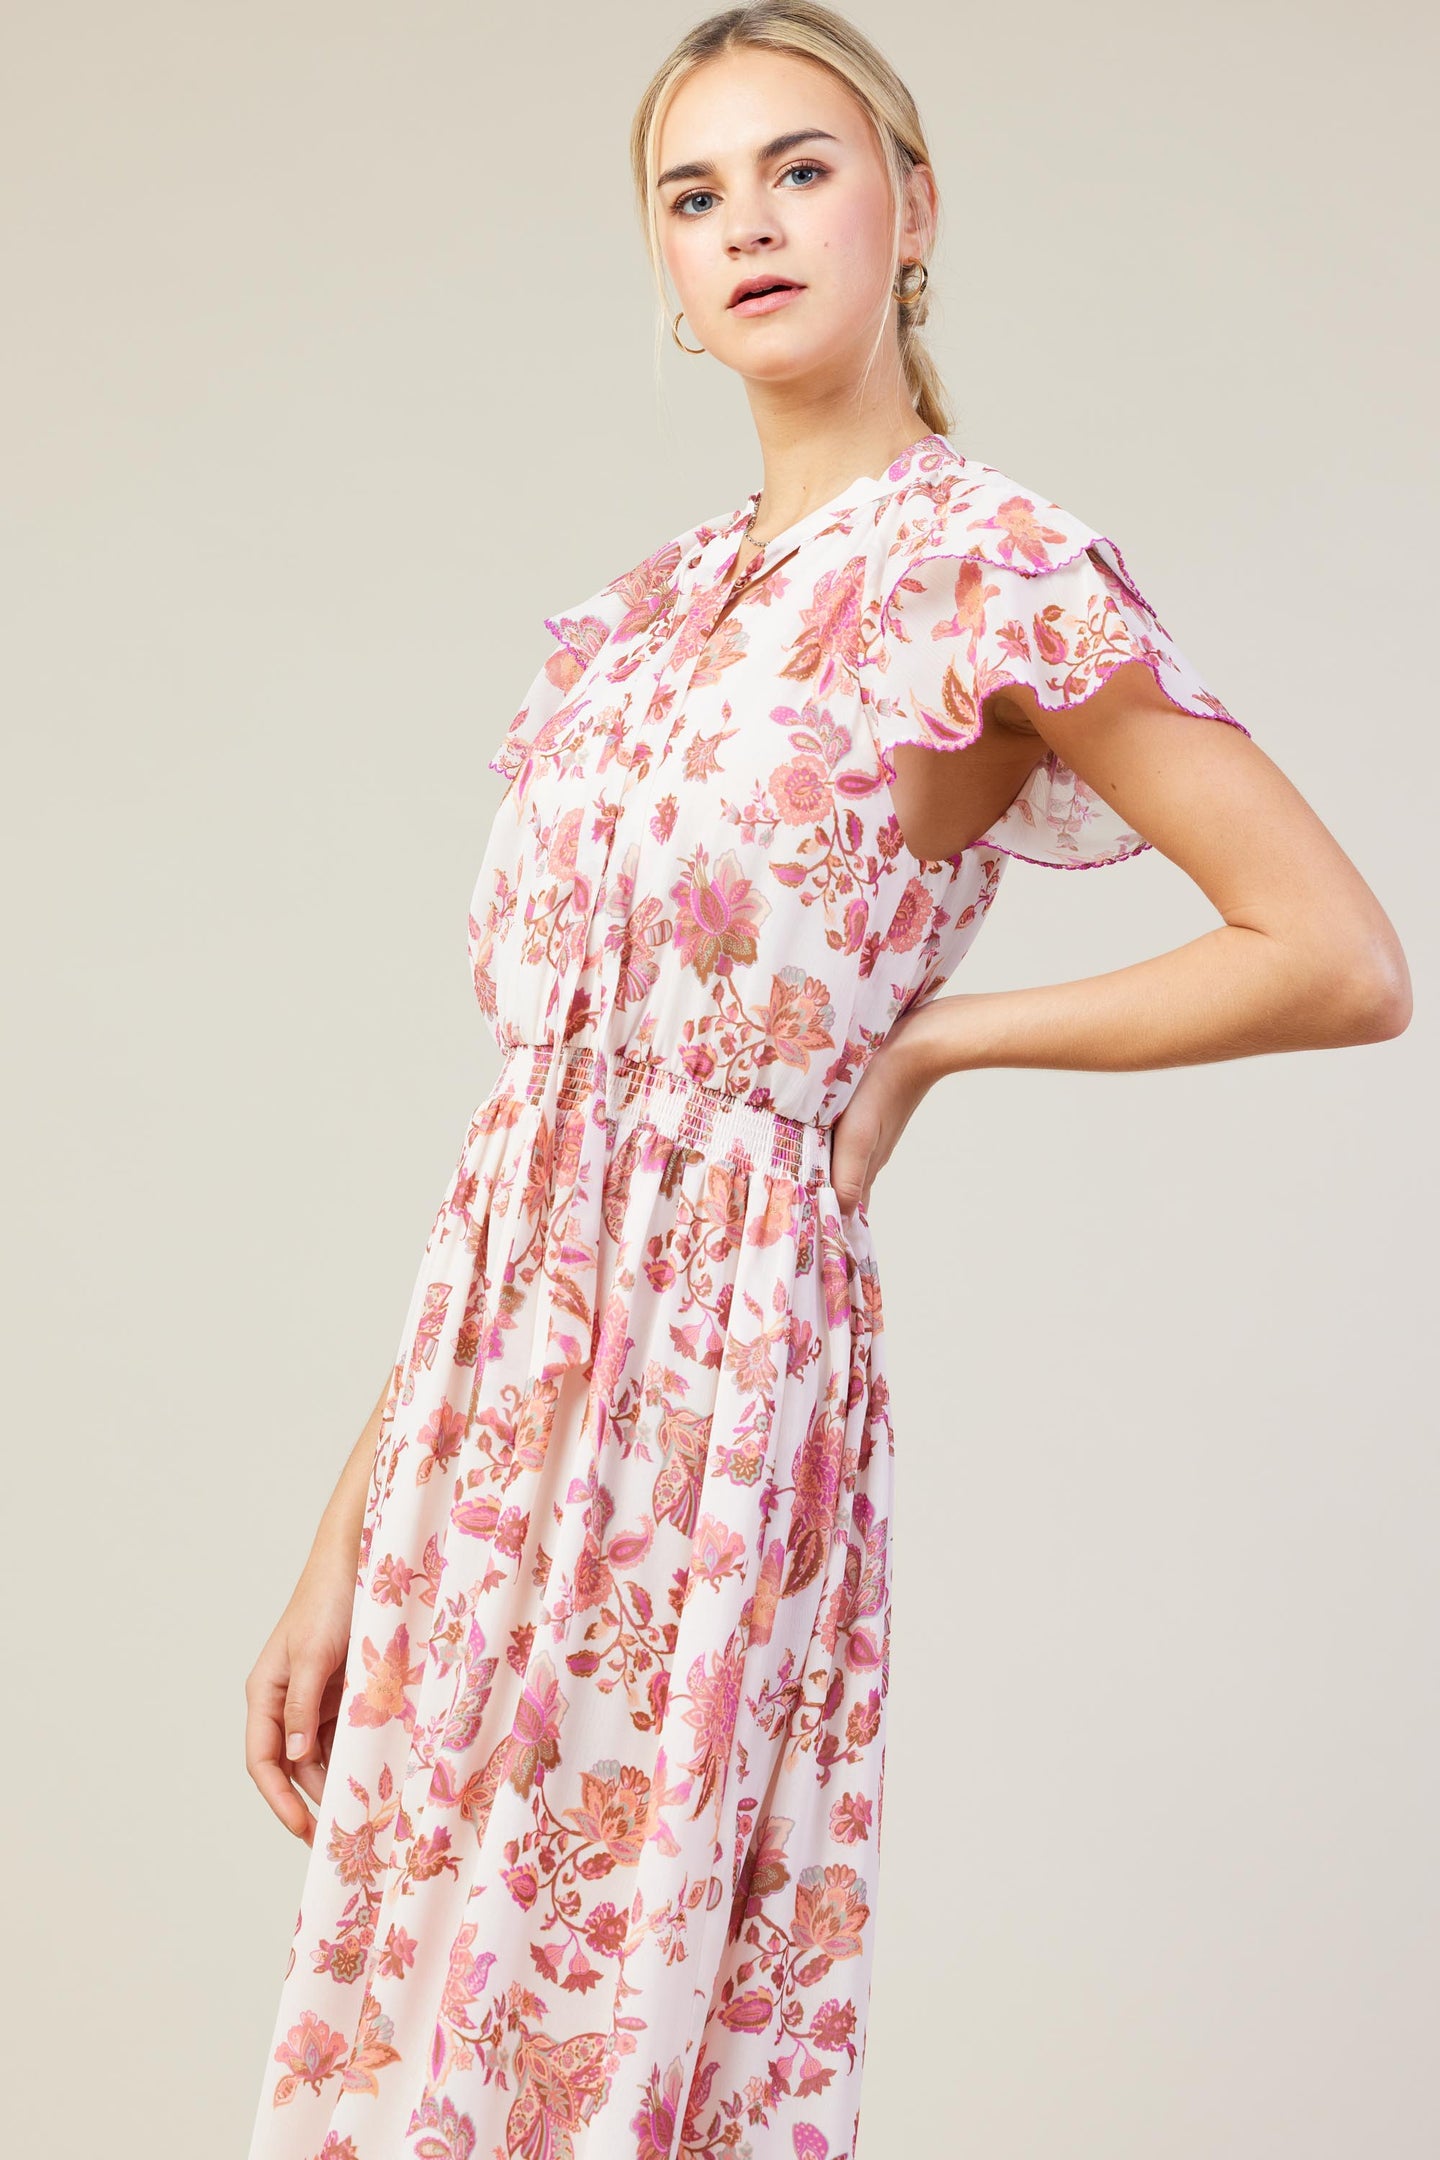 Ceres Floral Print Tie Neck Midi Dress